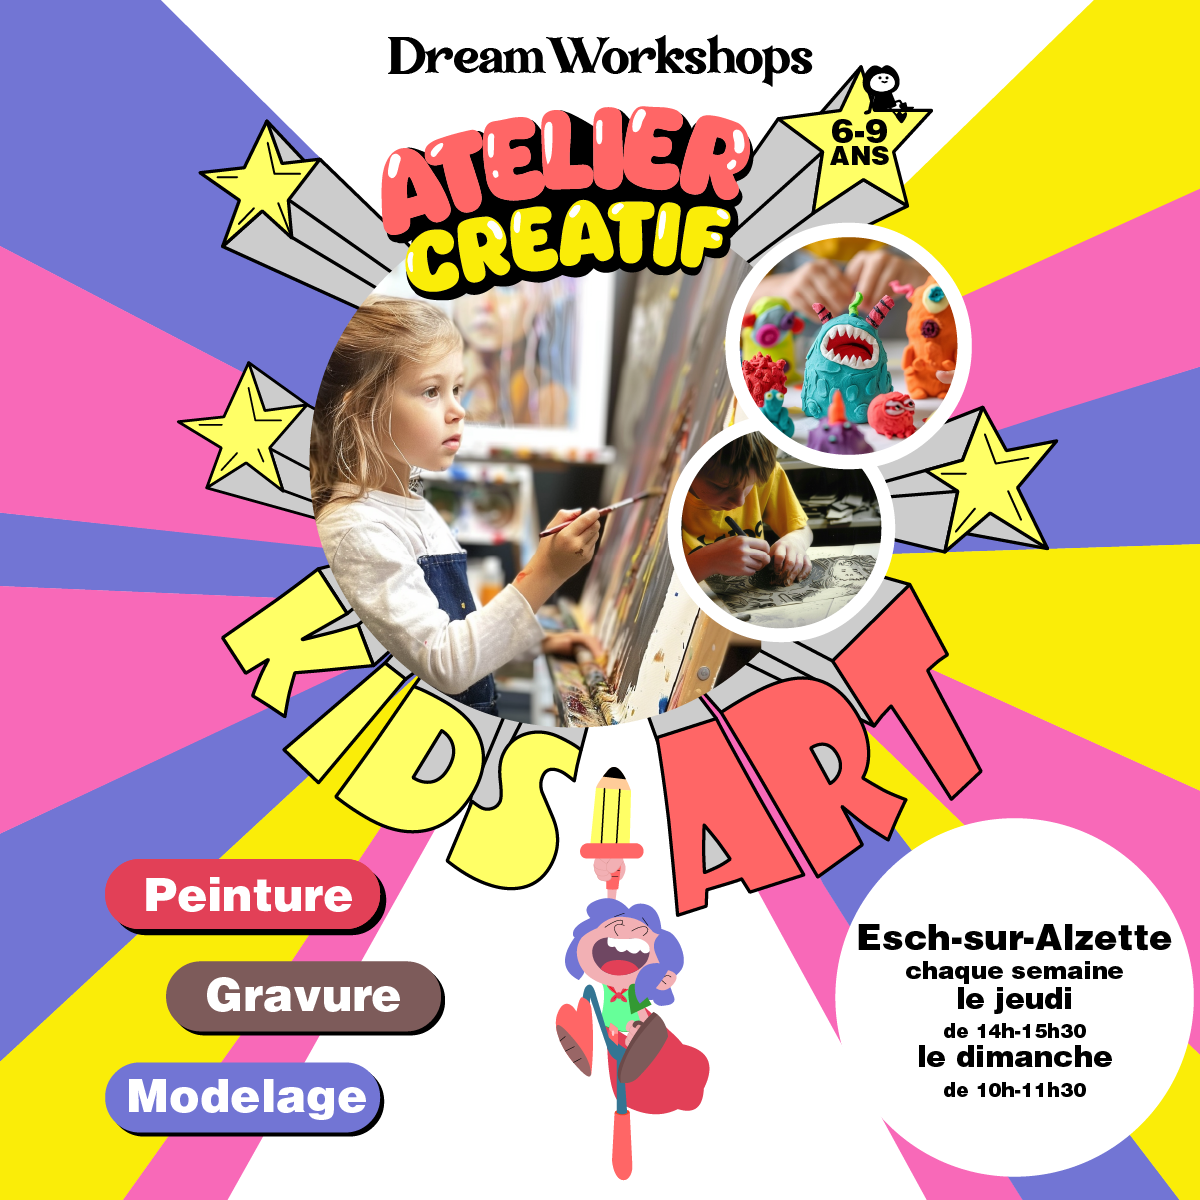 Creative Workshop 6-9 years old